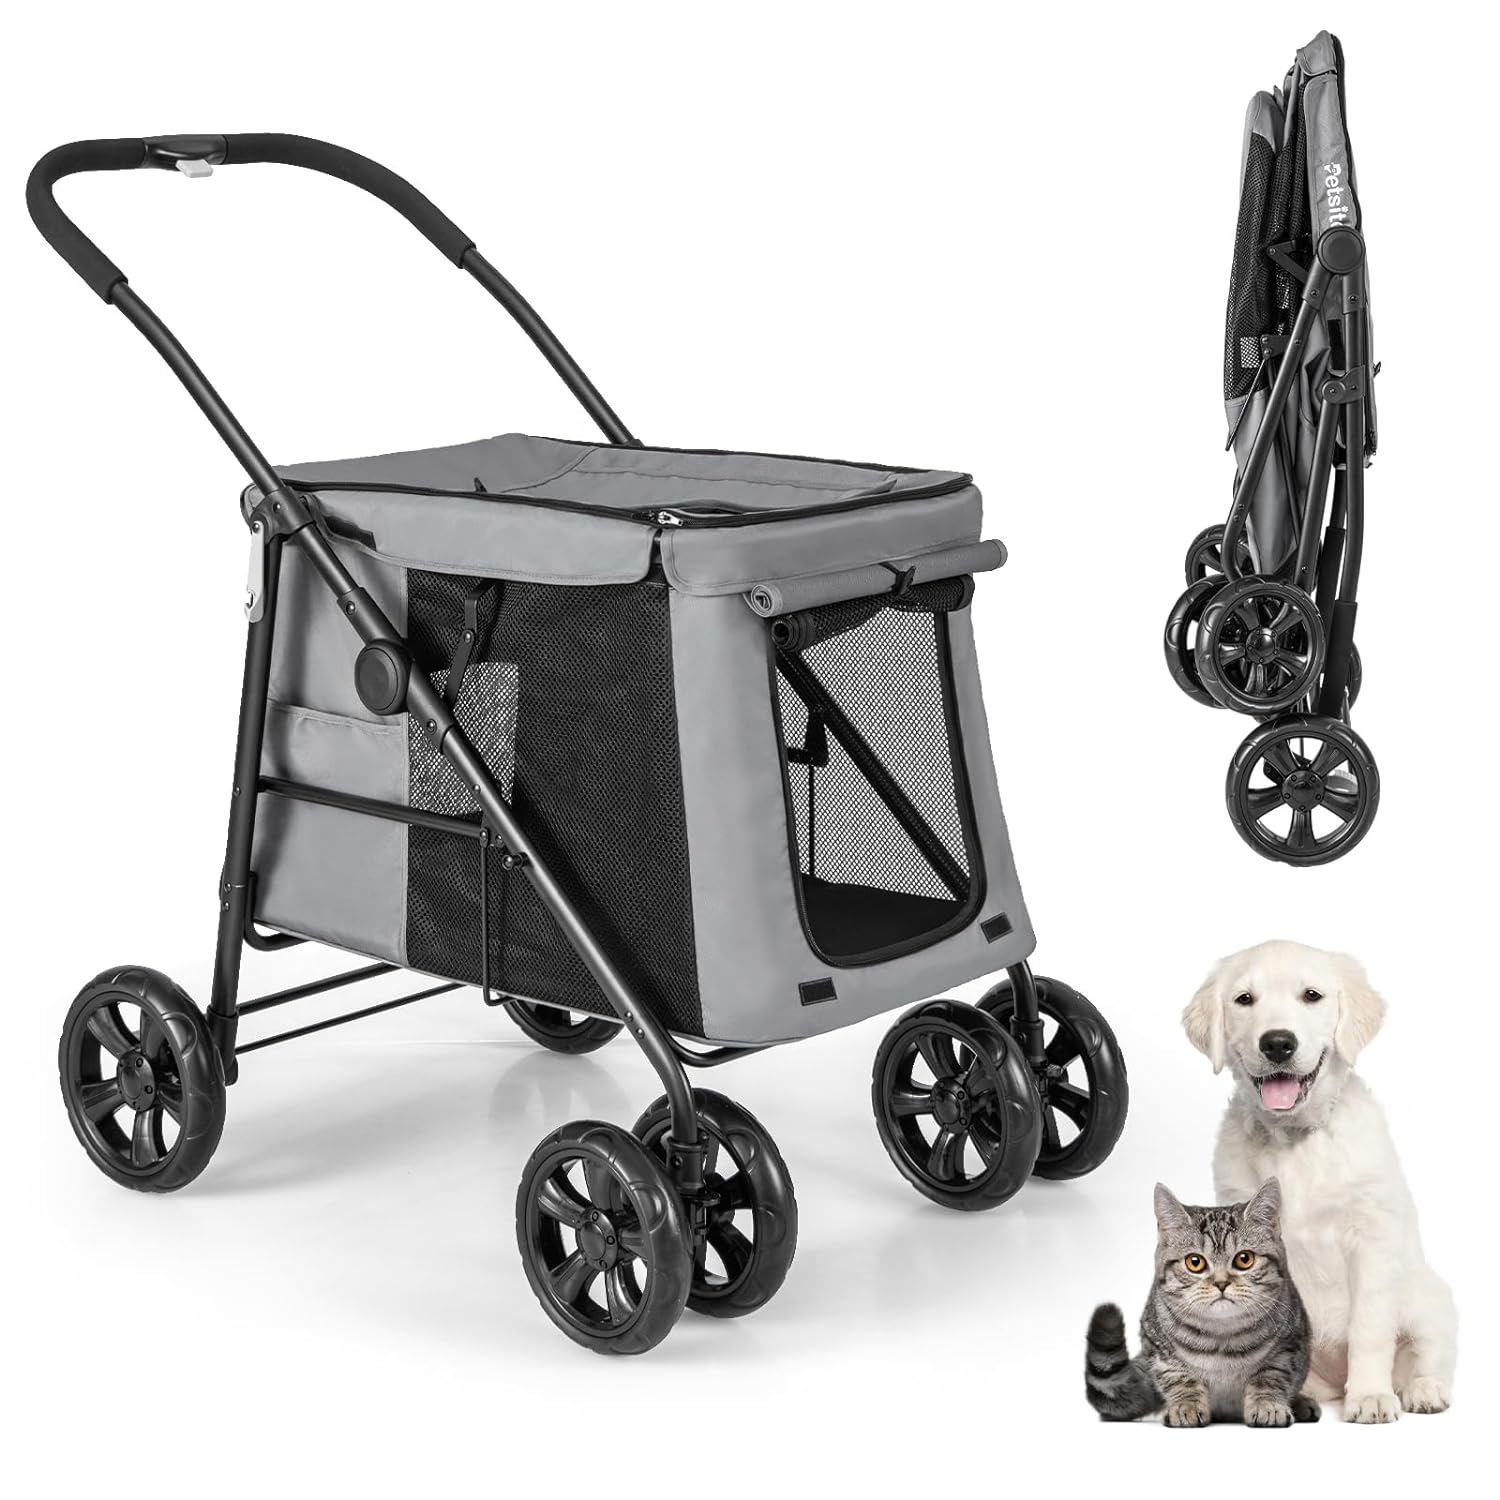 Giantex Dog Stroller, One-Button Folding Pet Stroller with 3 Entrances, 4 Shock-Absorbing Wheels